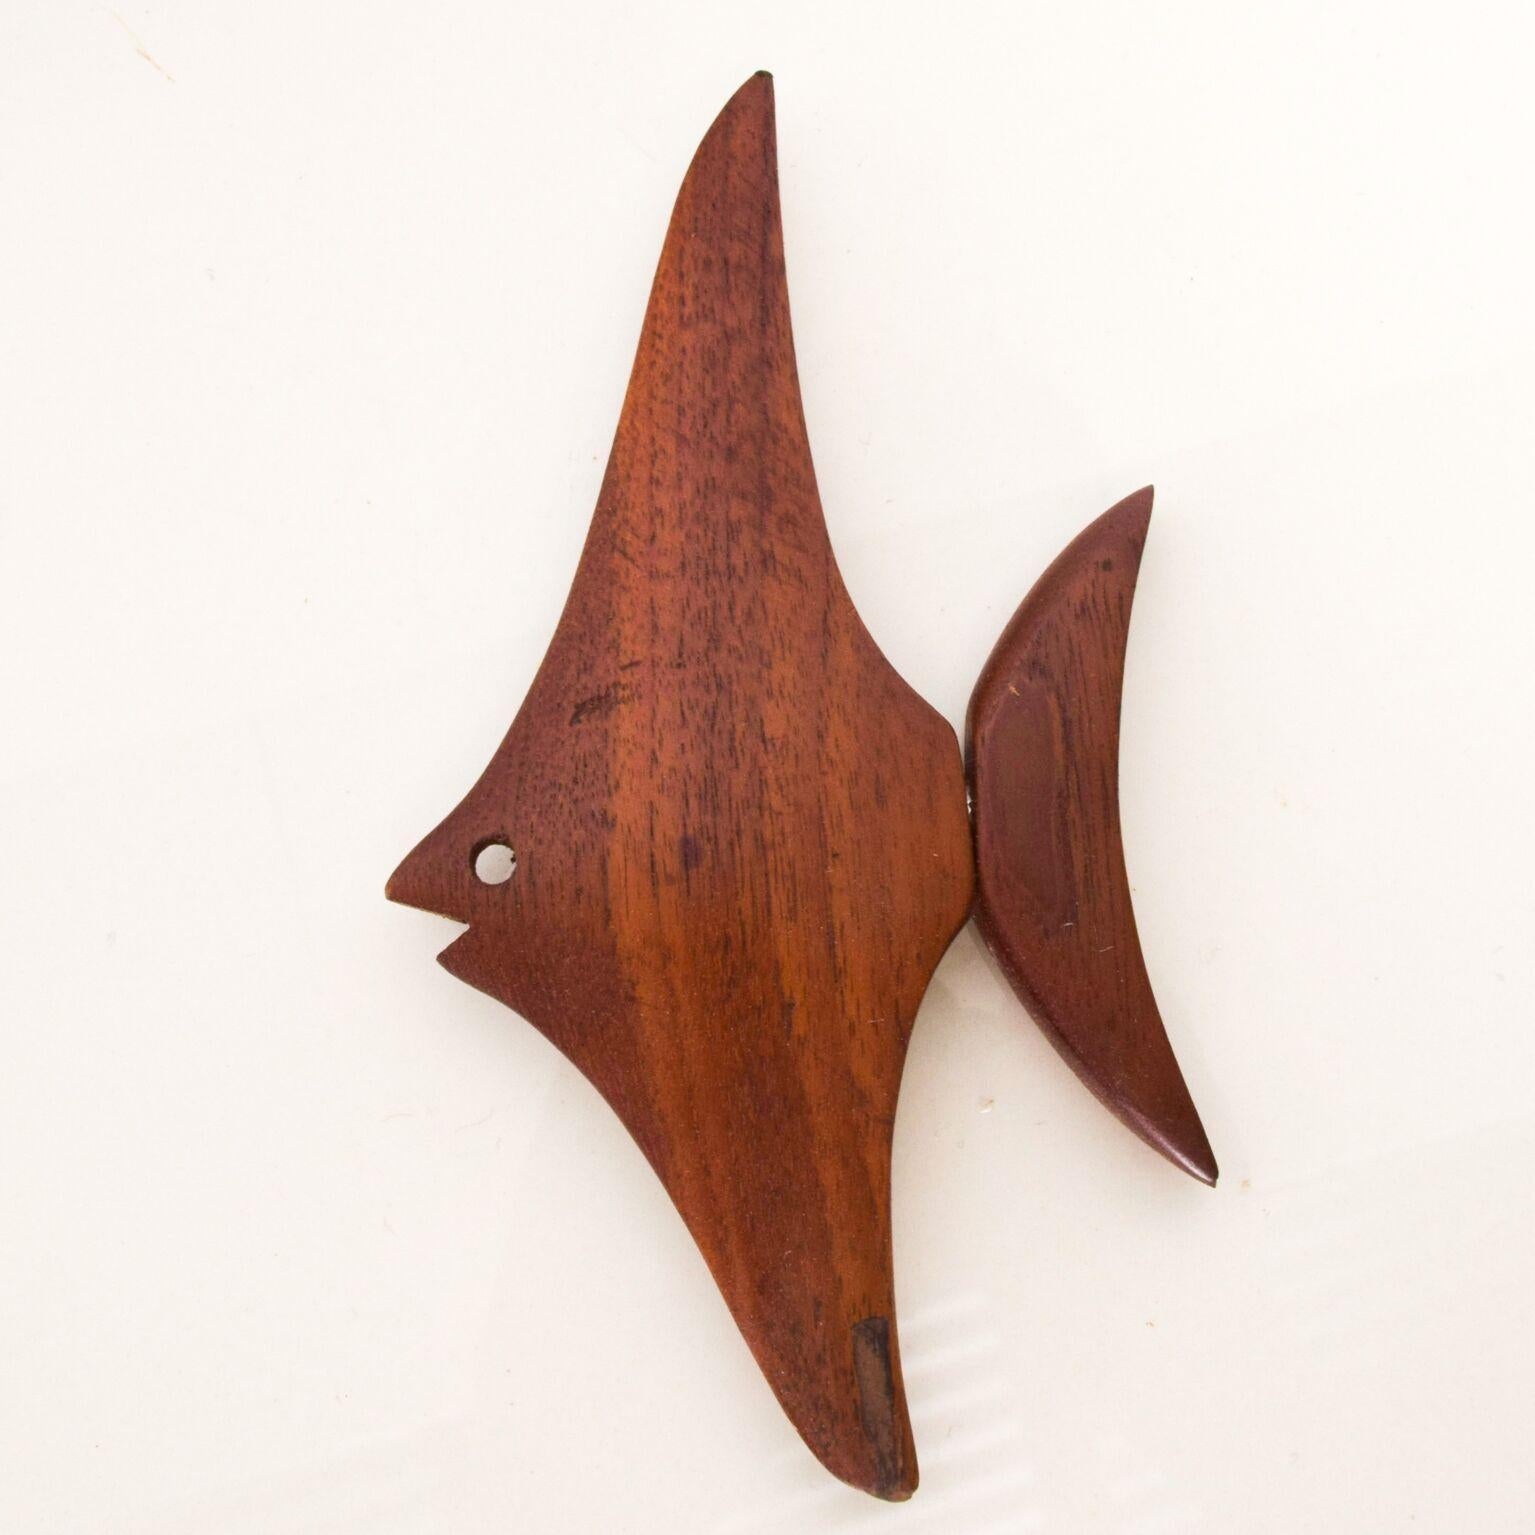 Danish Modern Fish Sculpture in Teak
In the style of Ernst Henriksen
Dimensions: 4 1/2